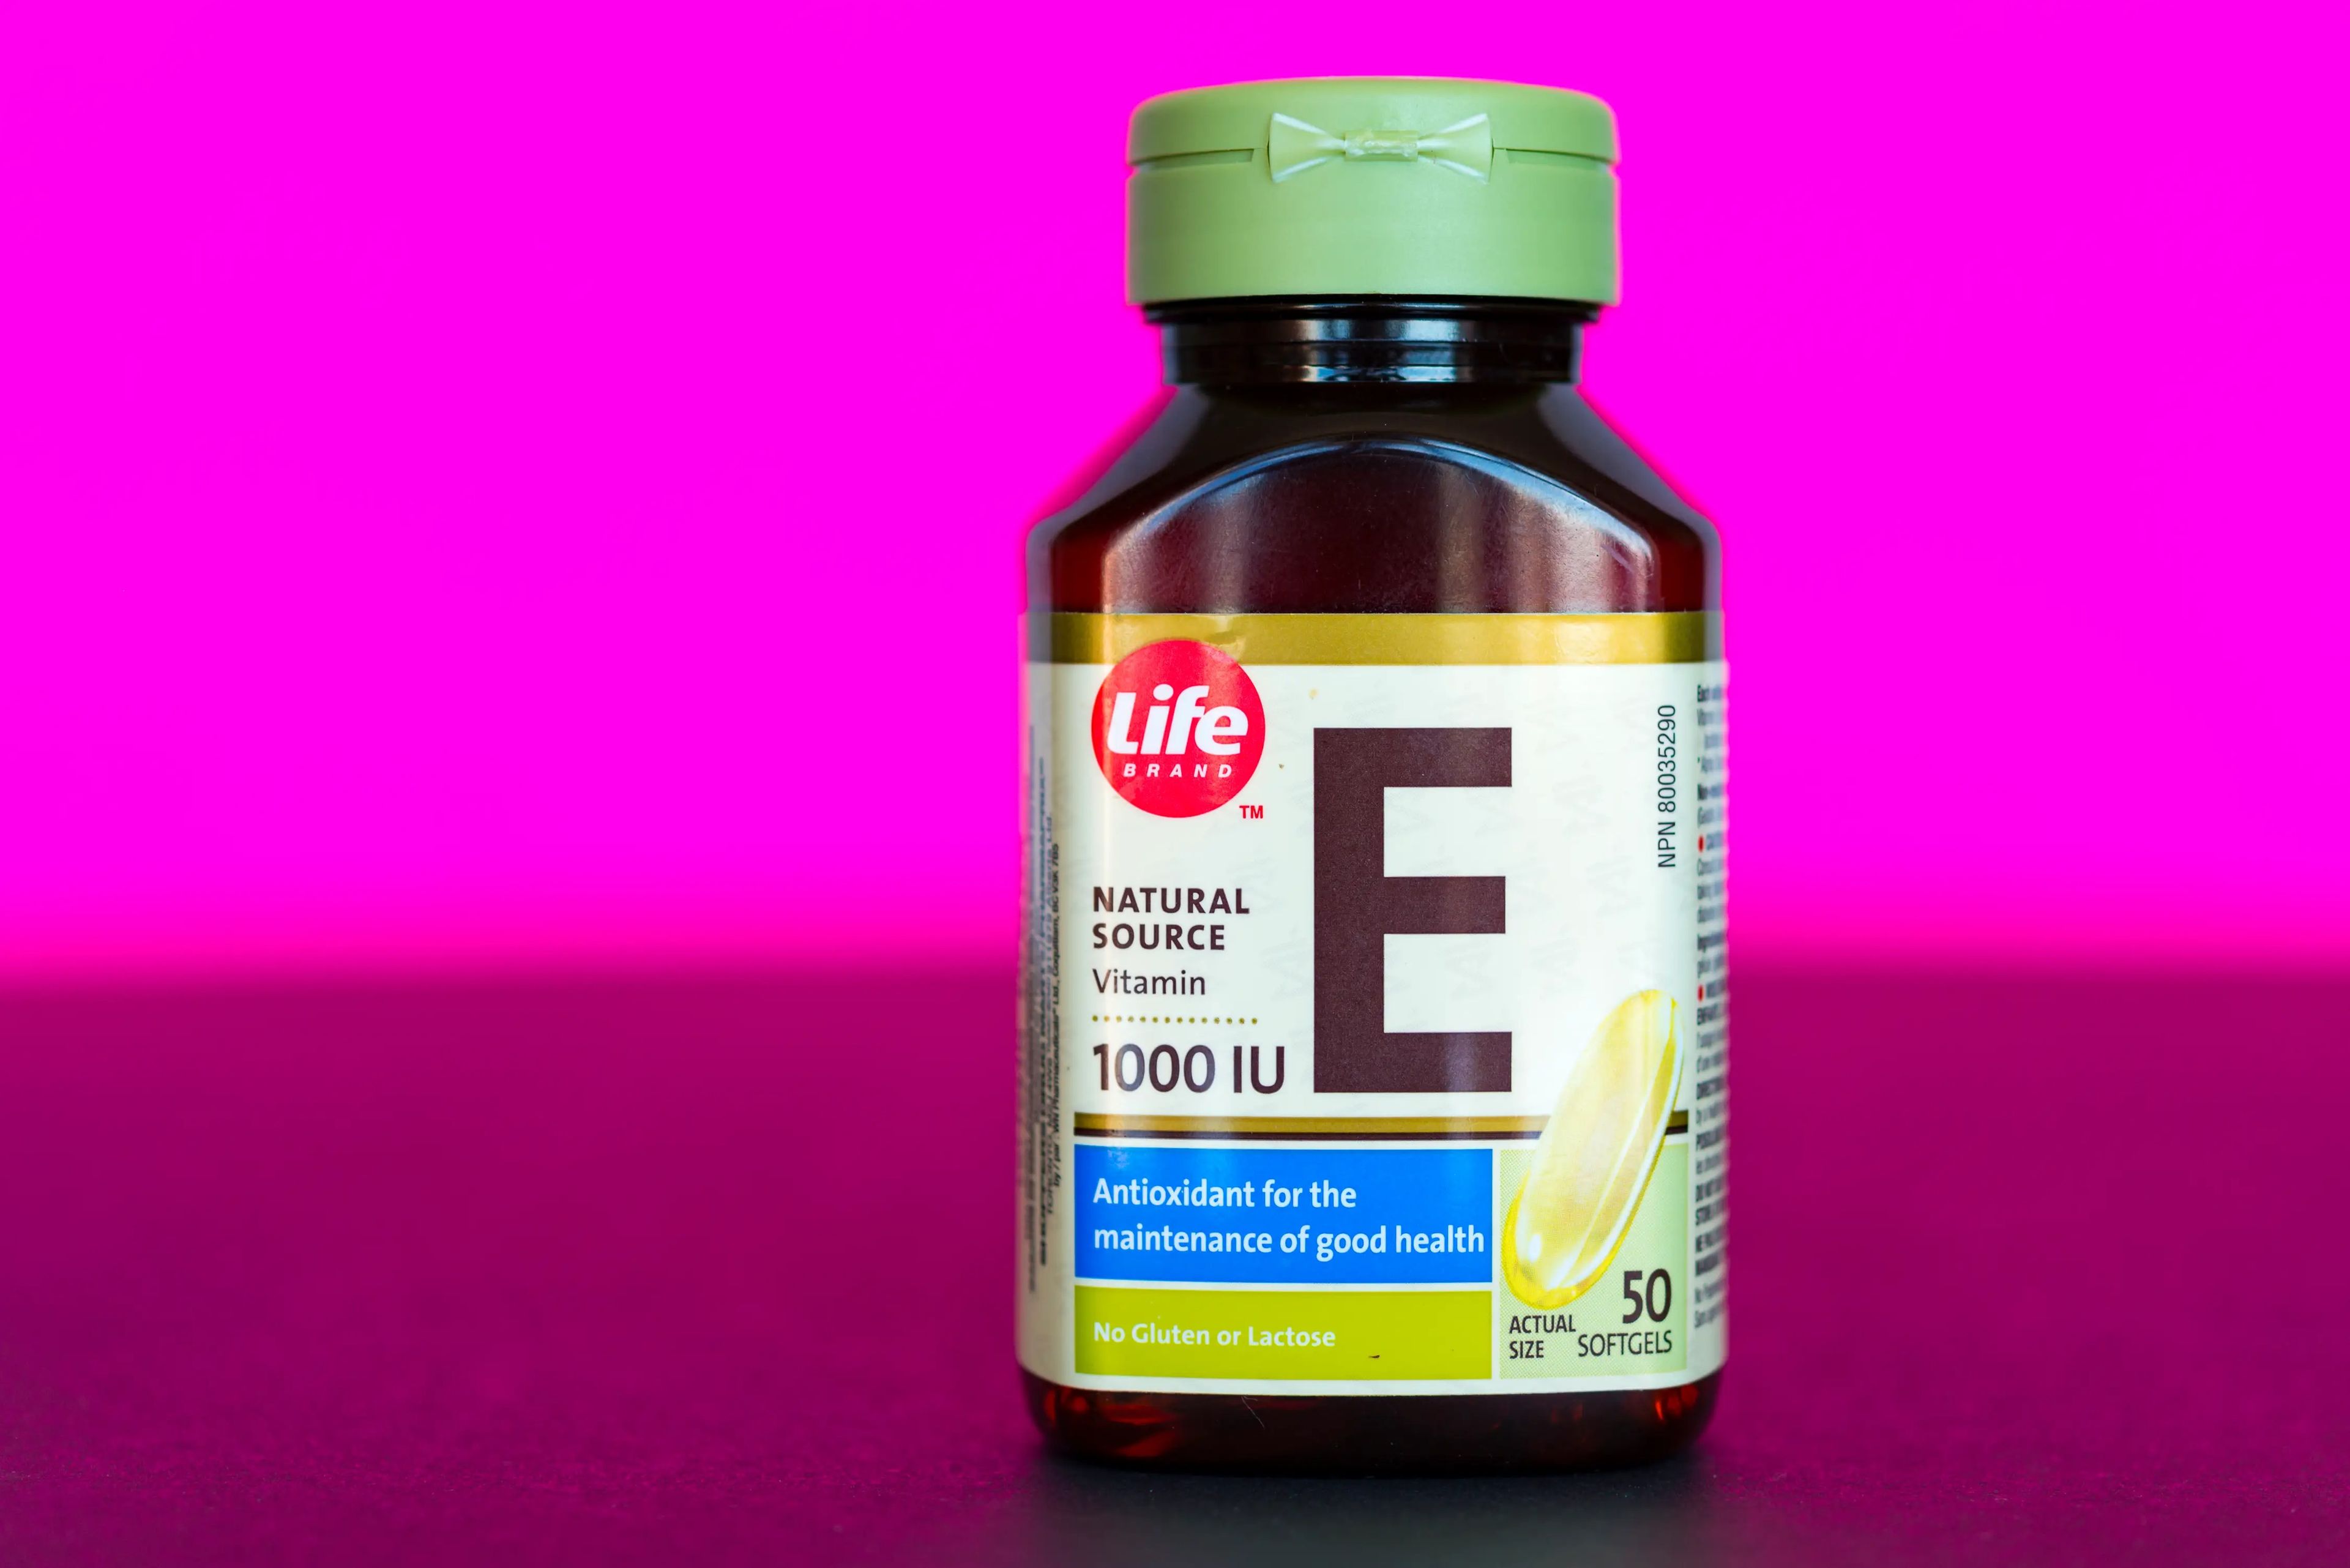 A bottle of Vitamin E